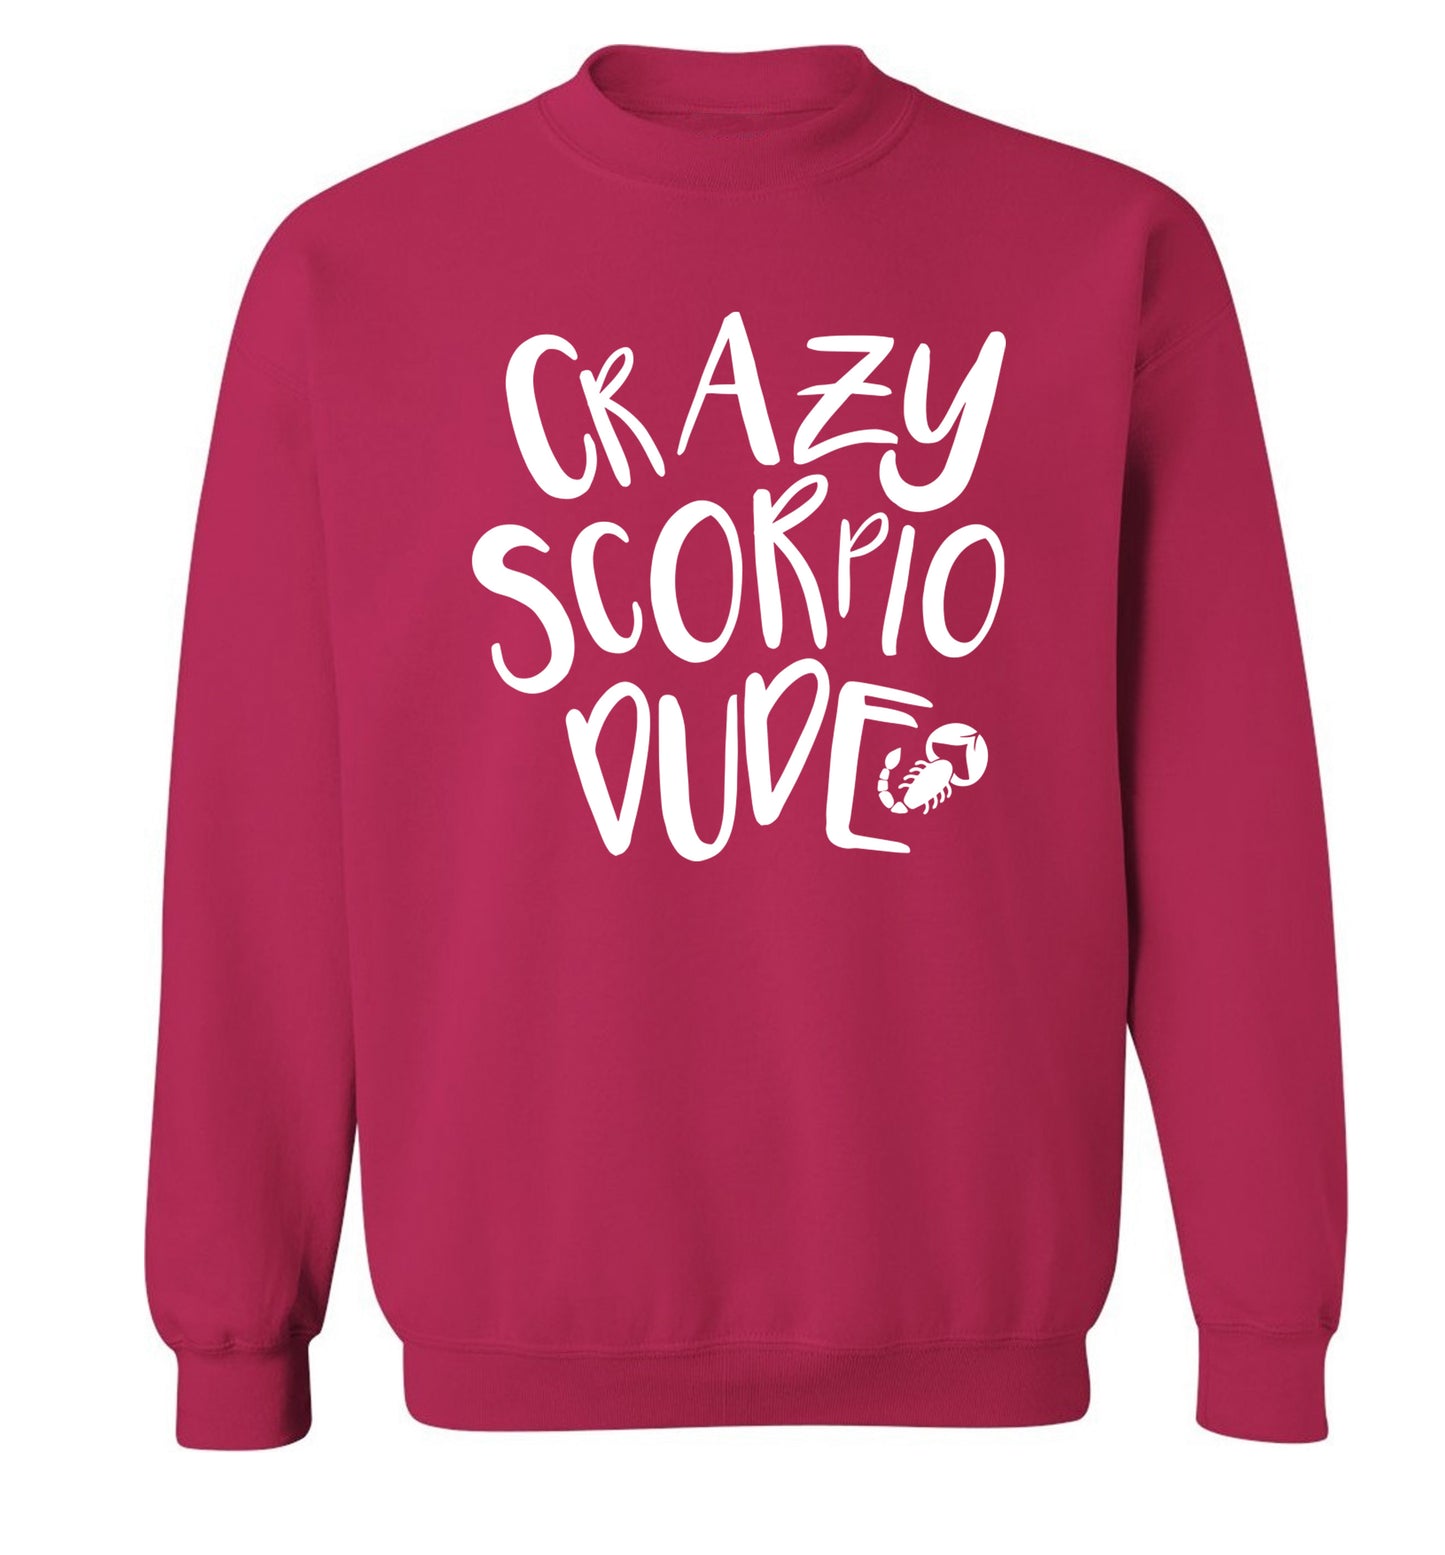 Crazy scorpio dude Adult's unisex pink Sweater 2XL